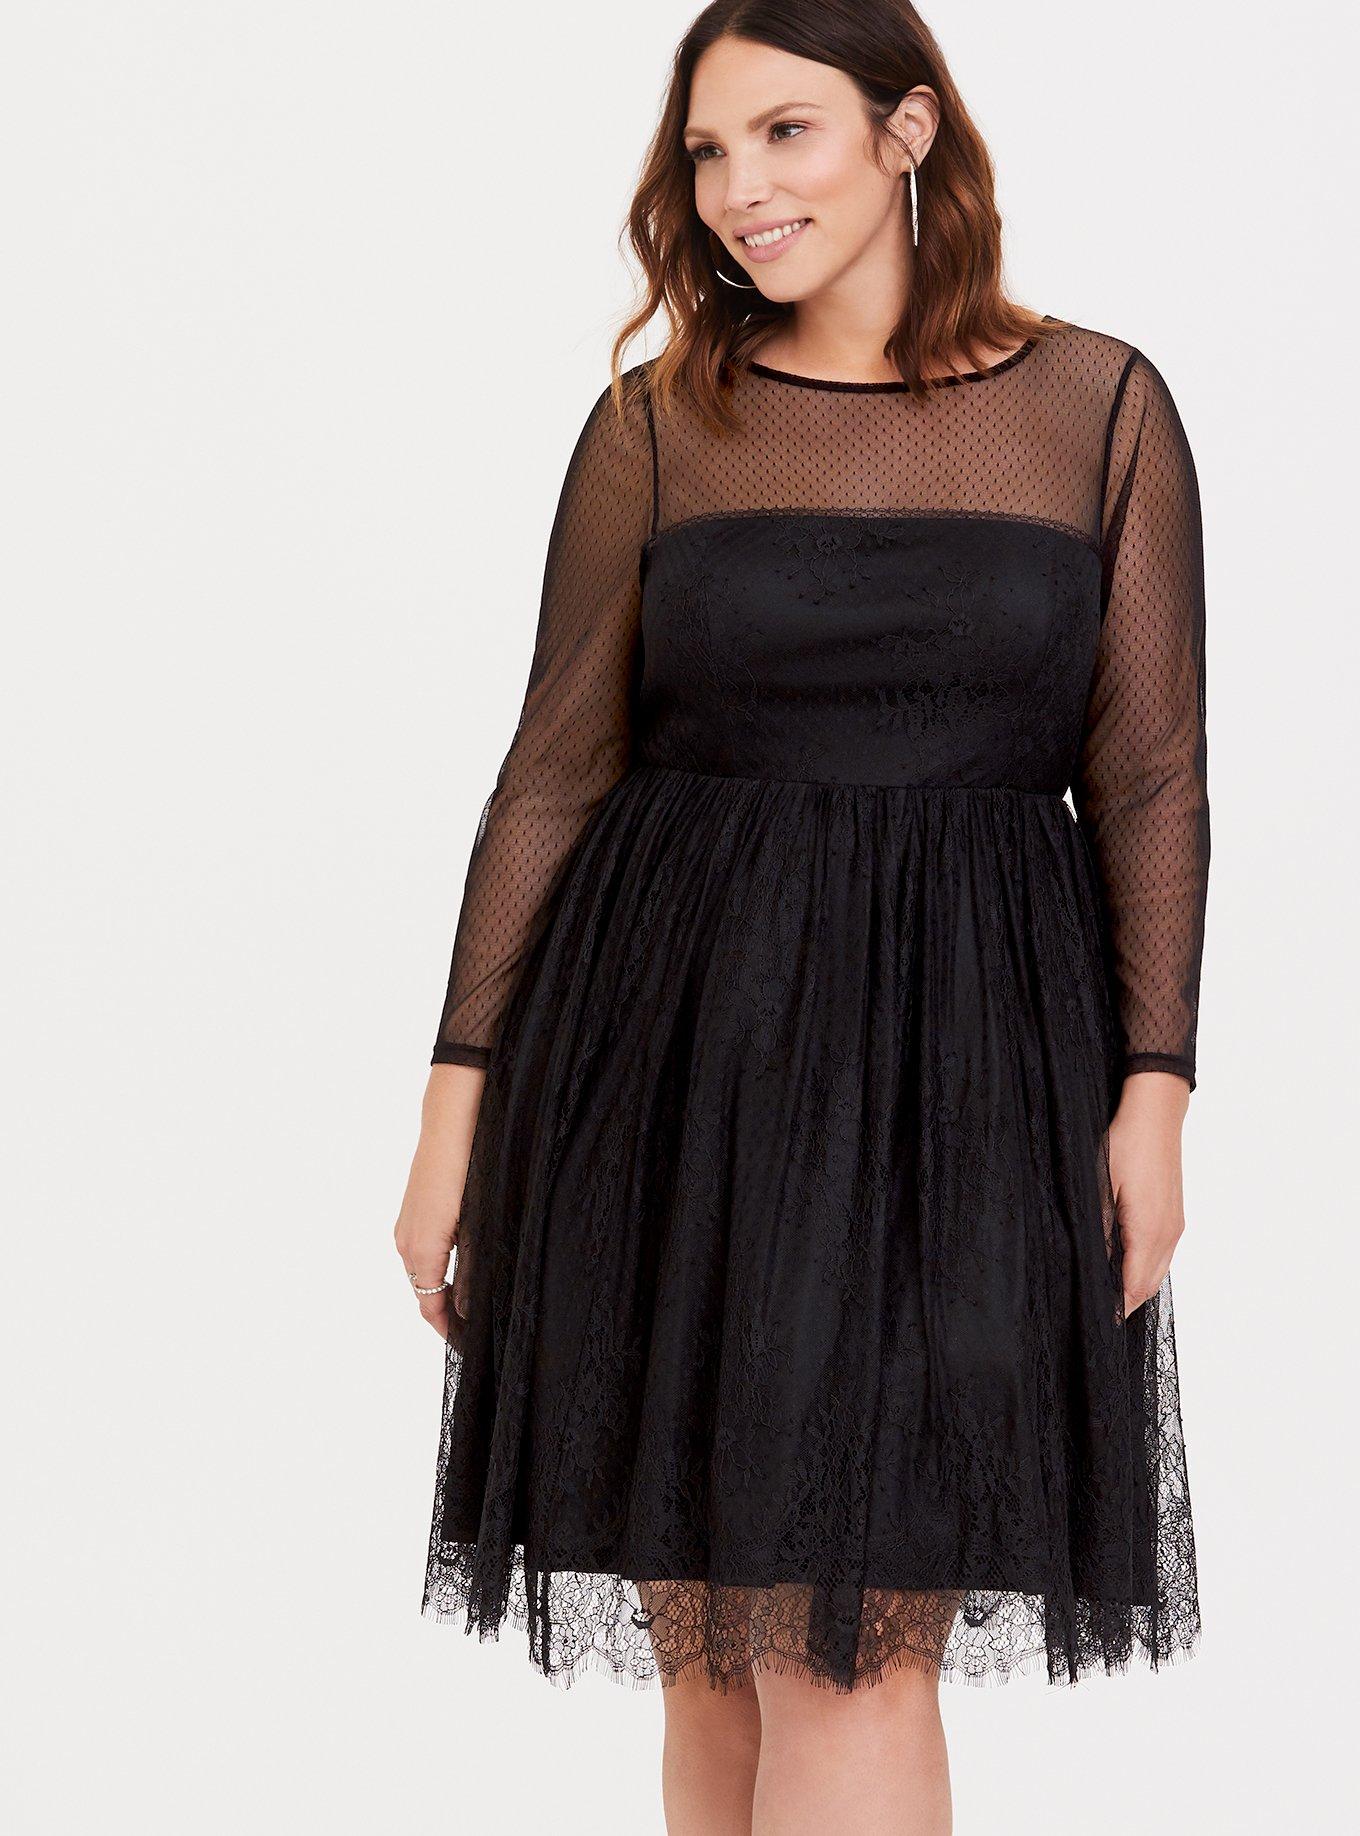 Plus Size - Black Lace Skater Dress - Torrid